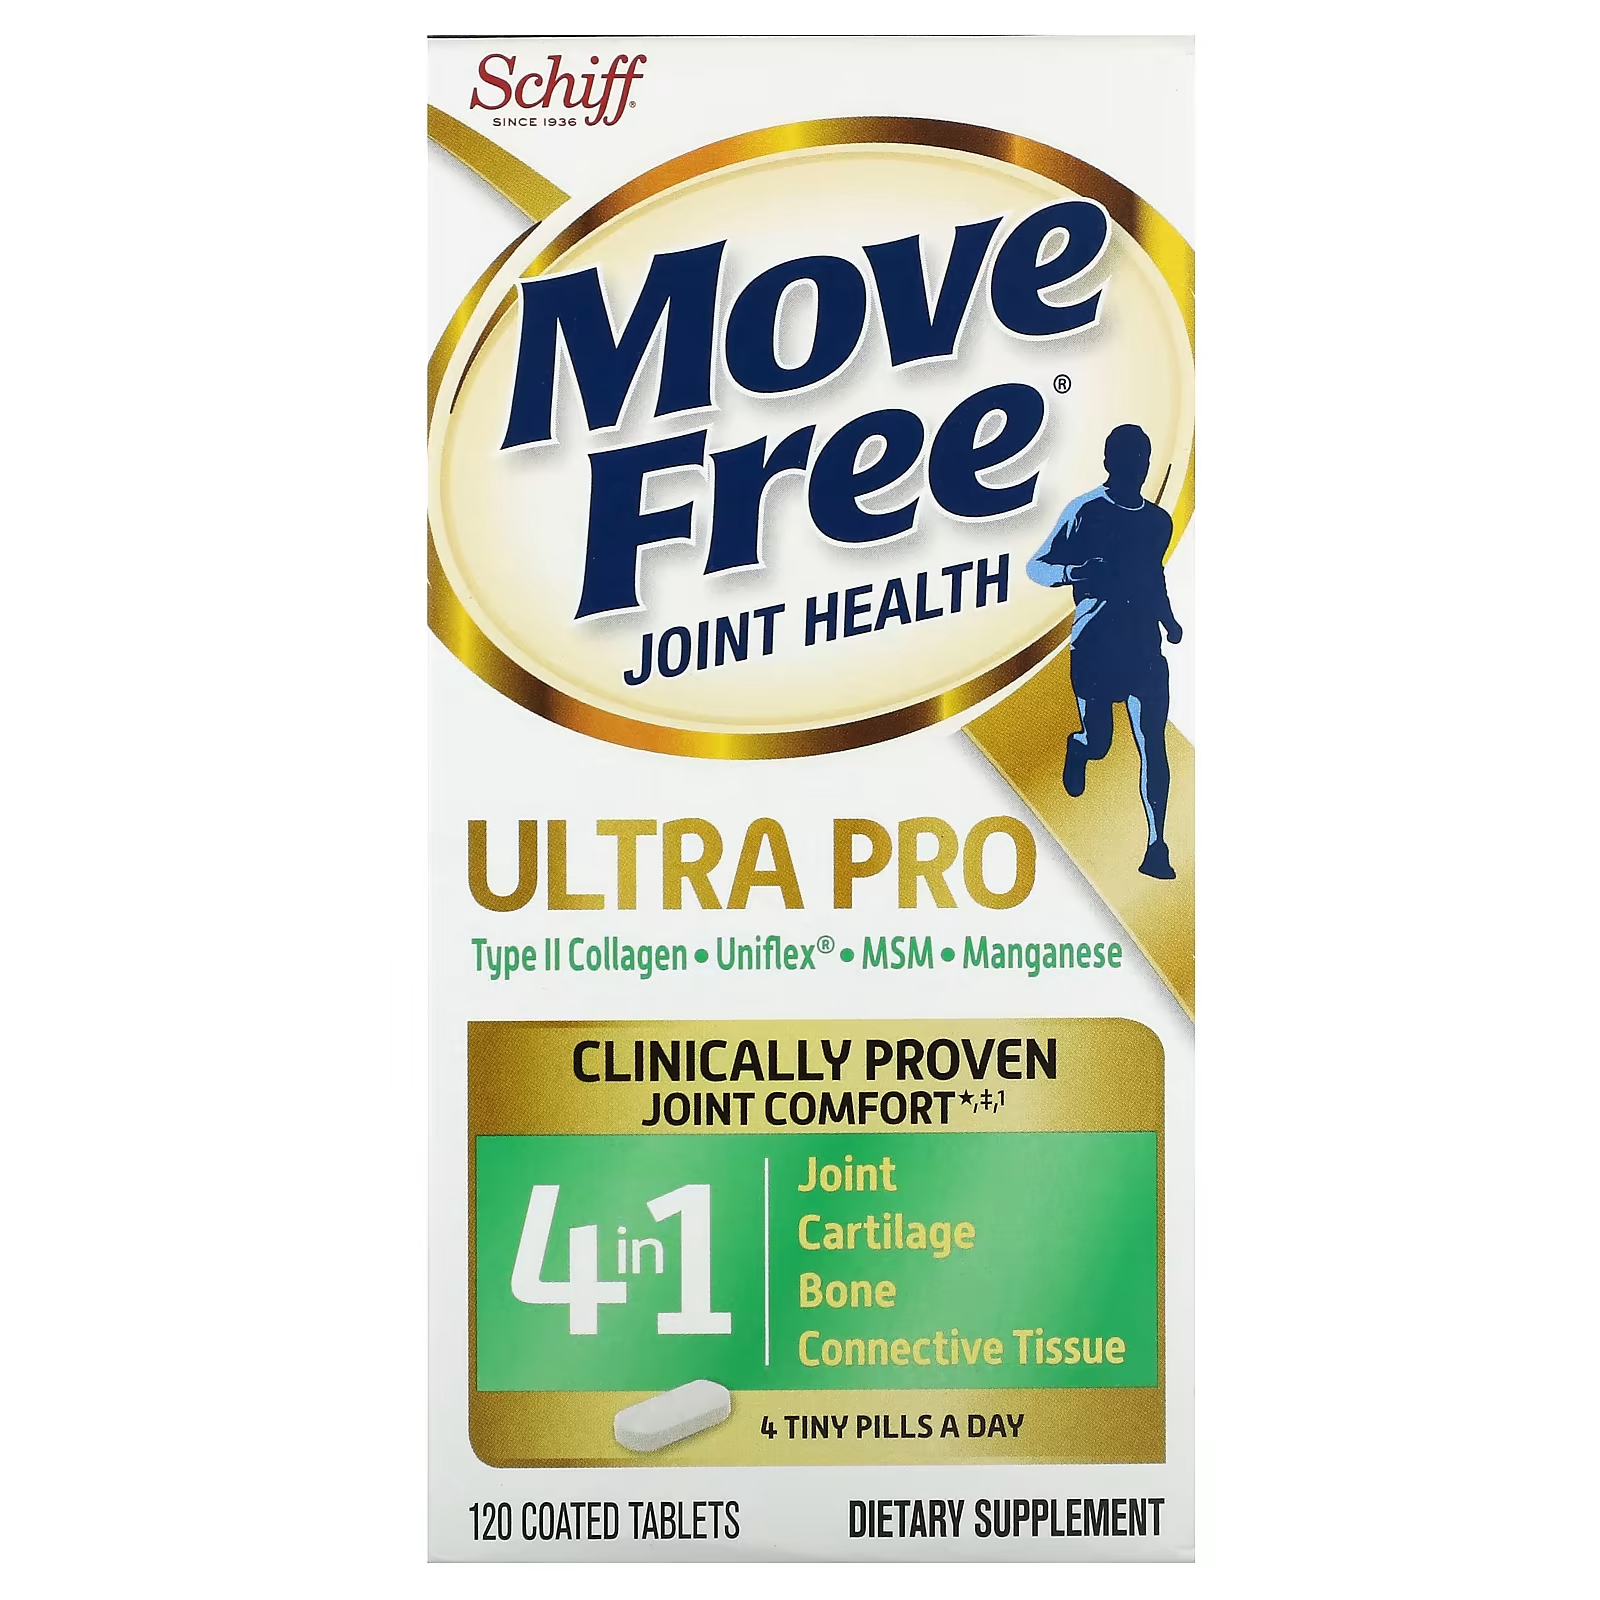 Пищевая добавка Schiff Move Free Joint Health Ultra Pro schiff move free joint health ultra pro 120 таблеток в оболочке